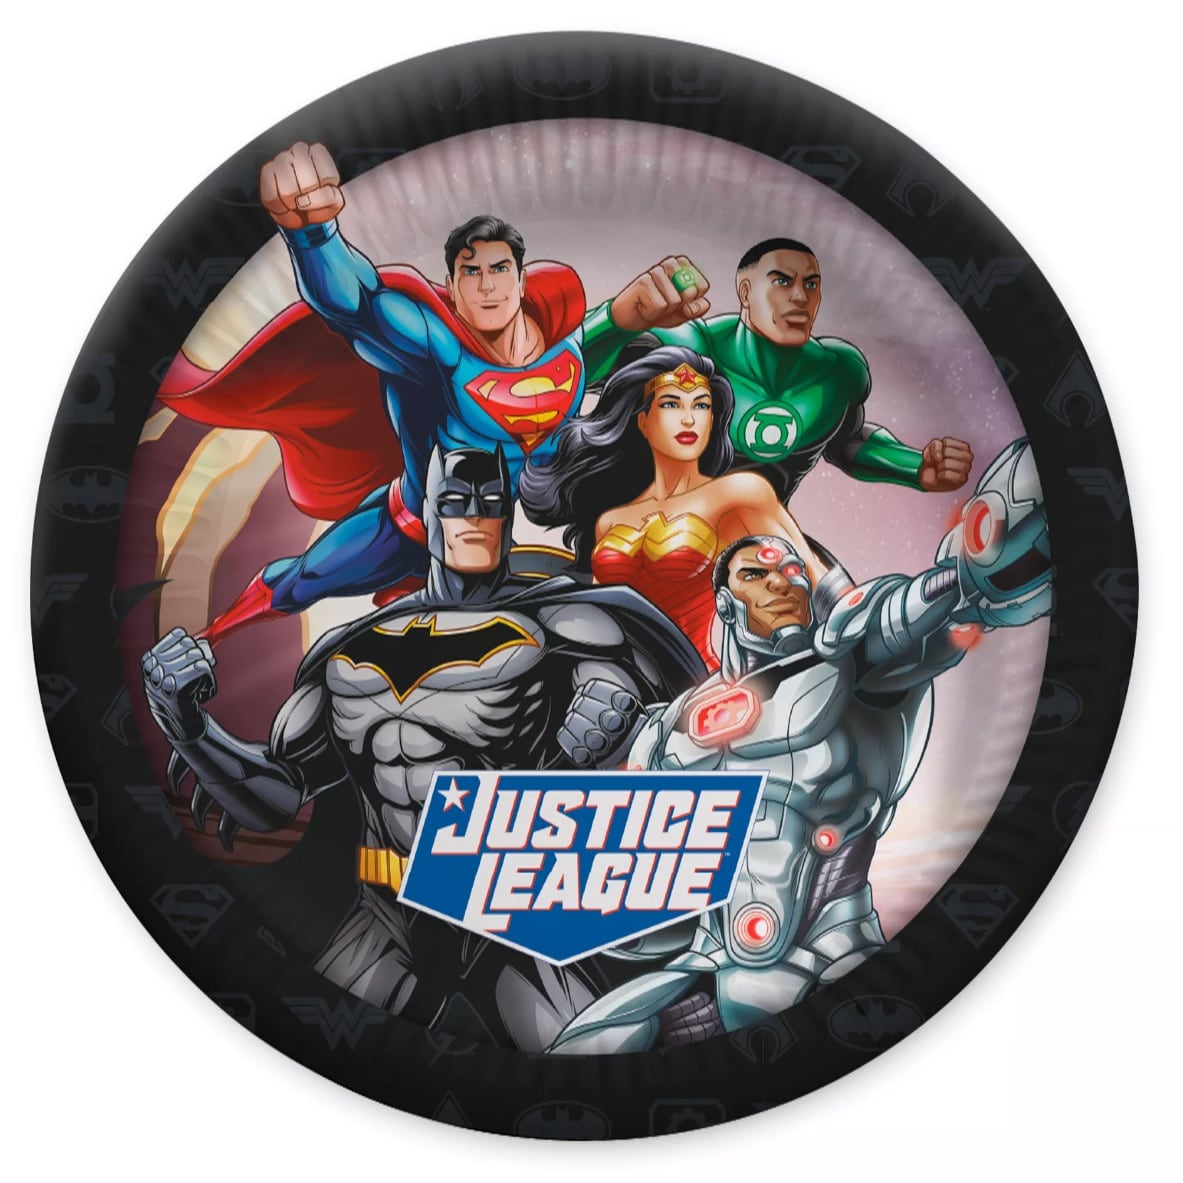 Justice League - Tallerkener 10 stk